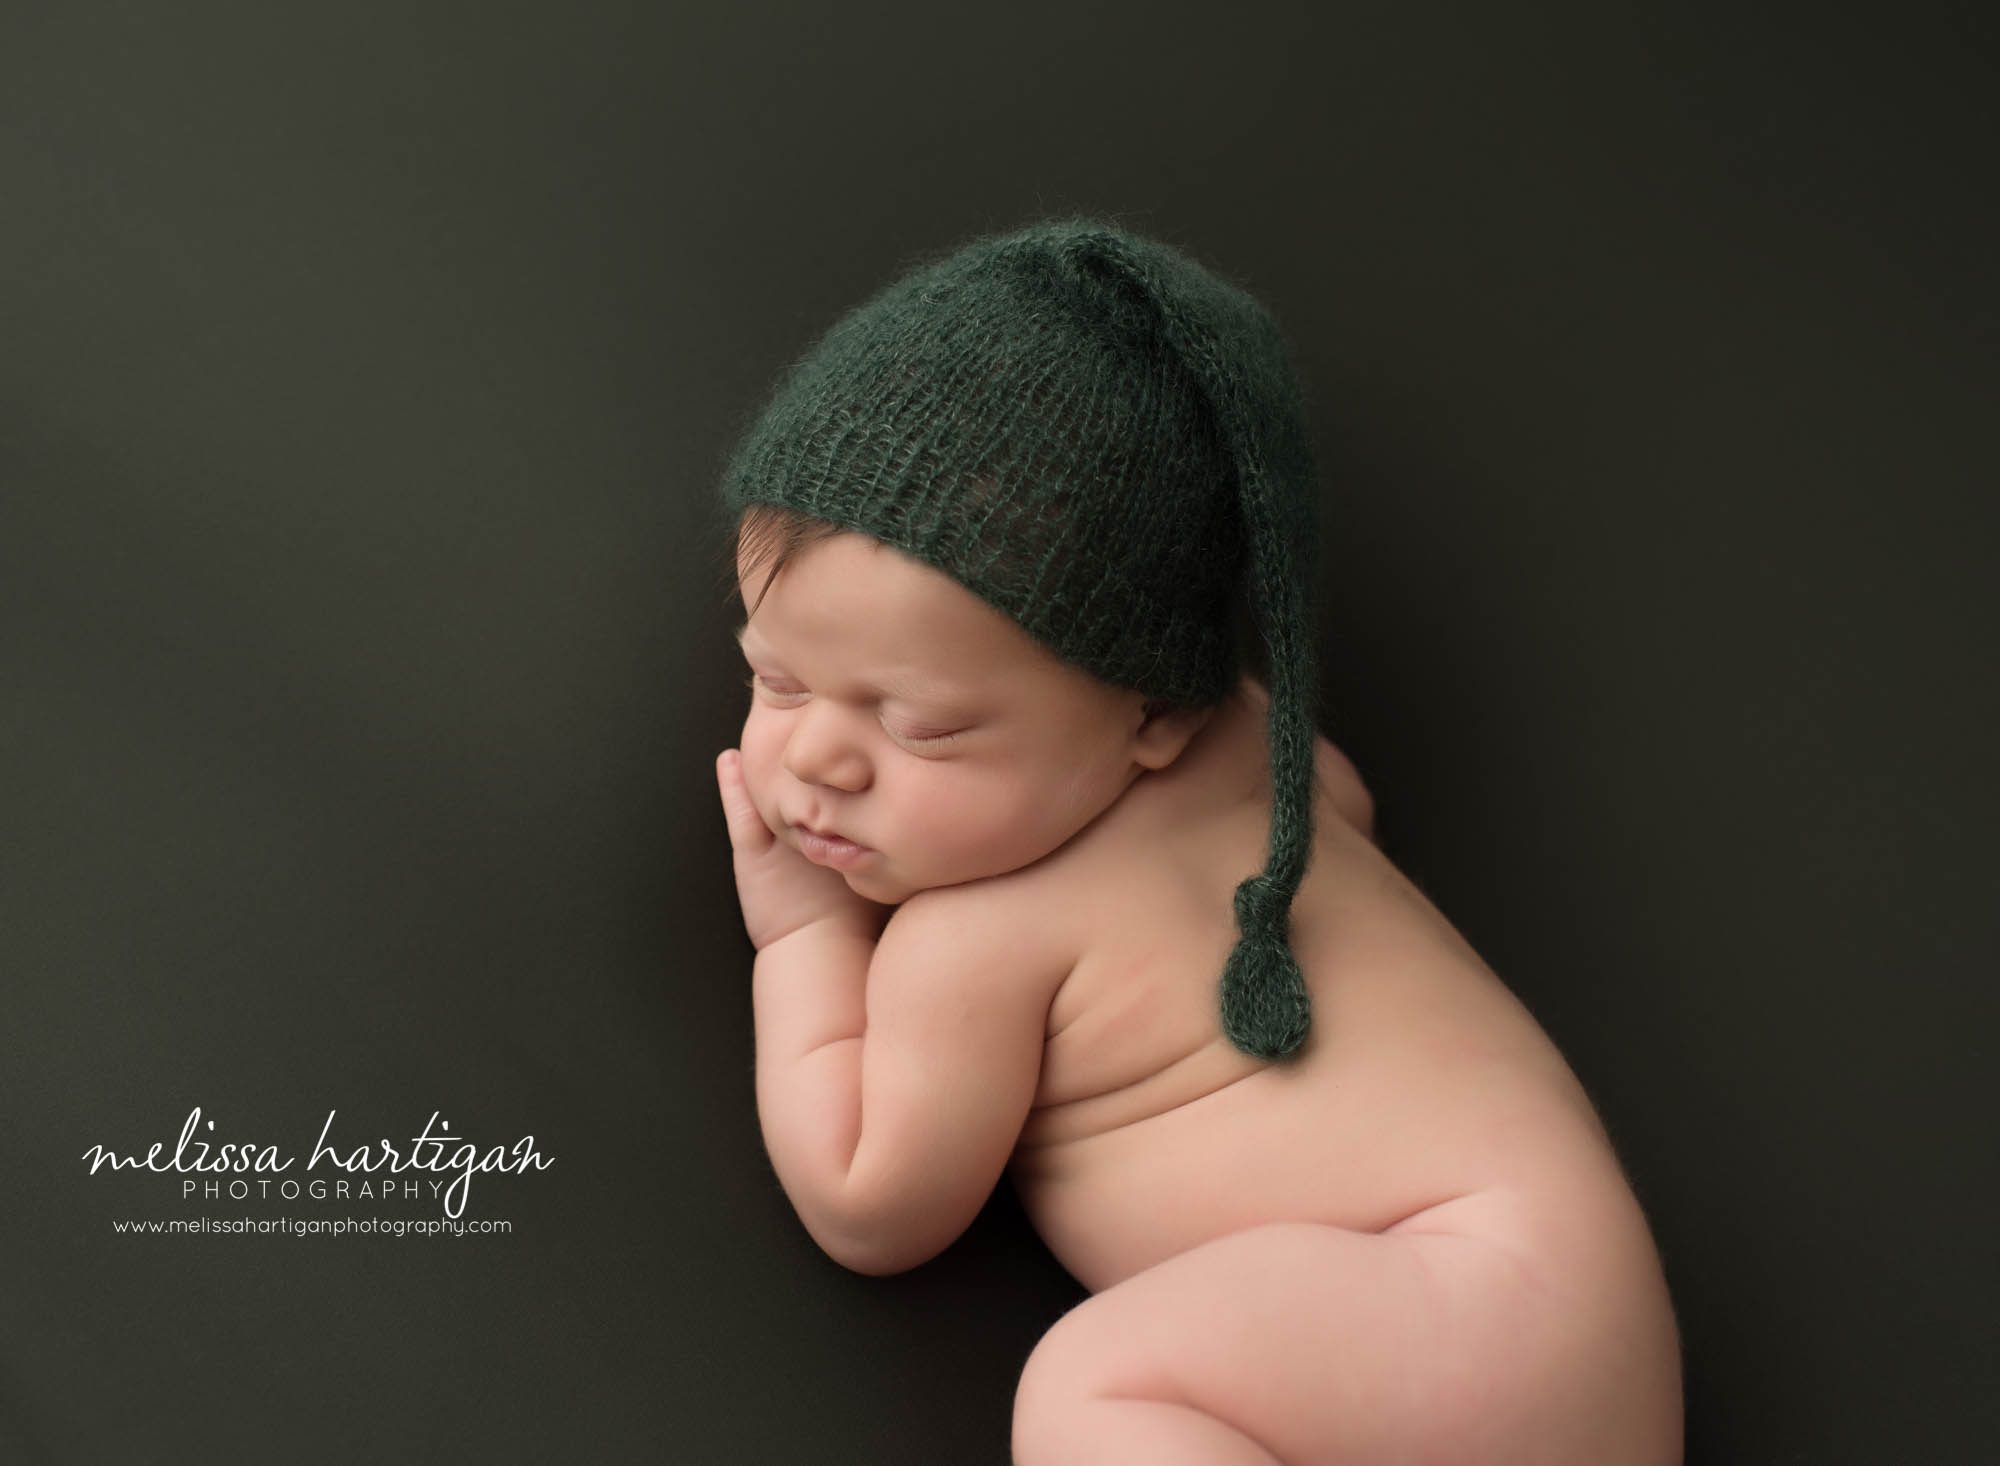 newborn baby boy posed on side tummy wearing knitted green sleepy cap